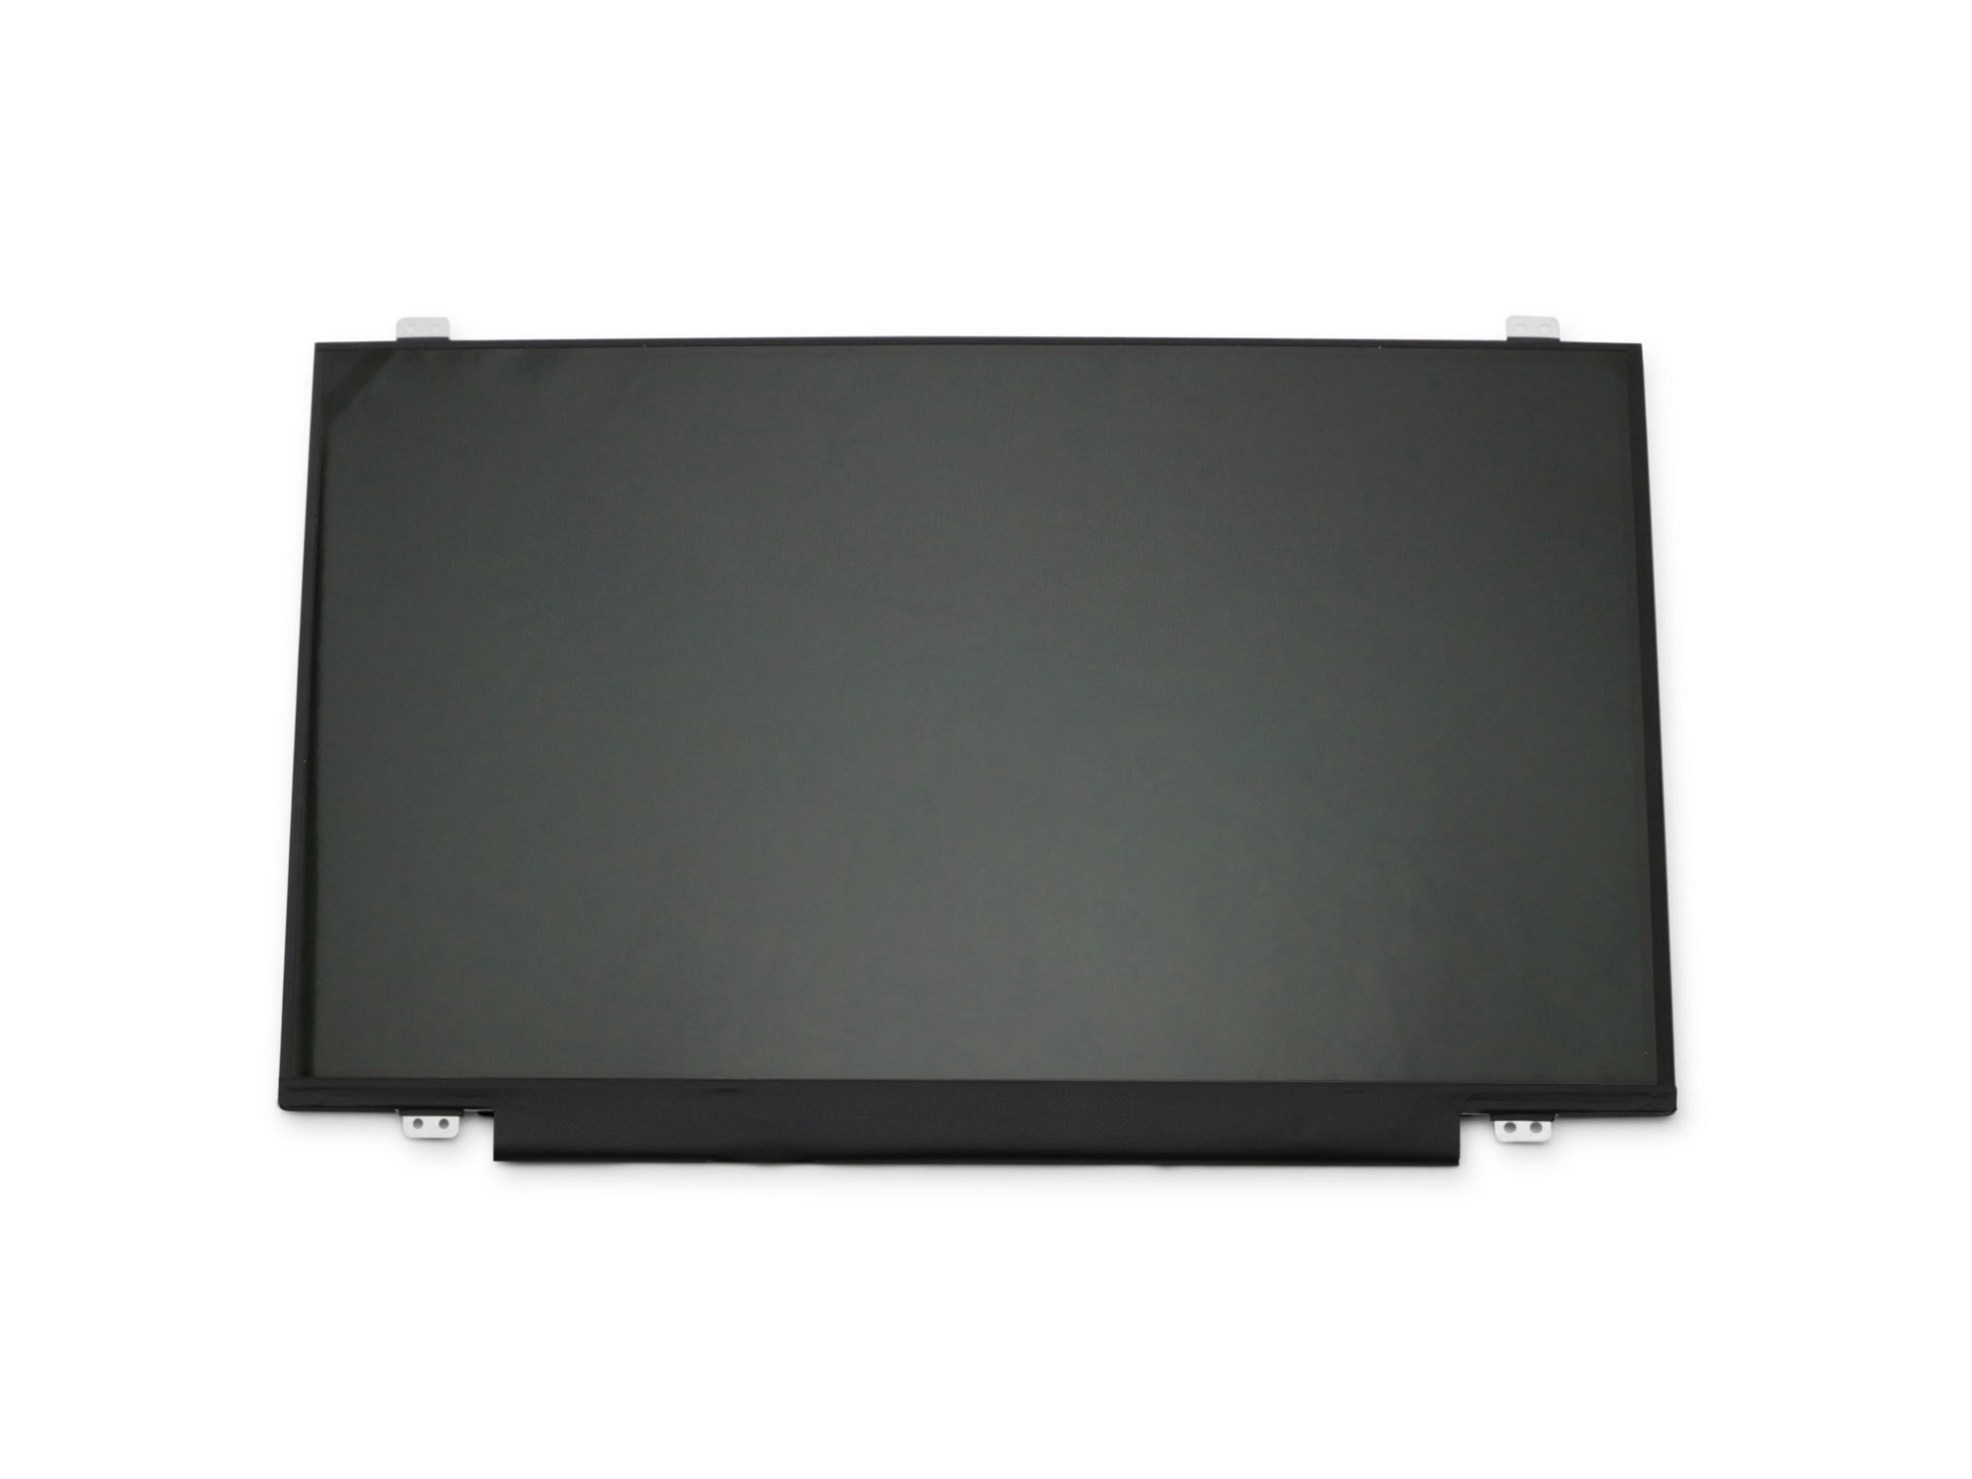 LG LP140WH8-TPH1 Display (1366x768) glänzend slimline